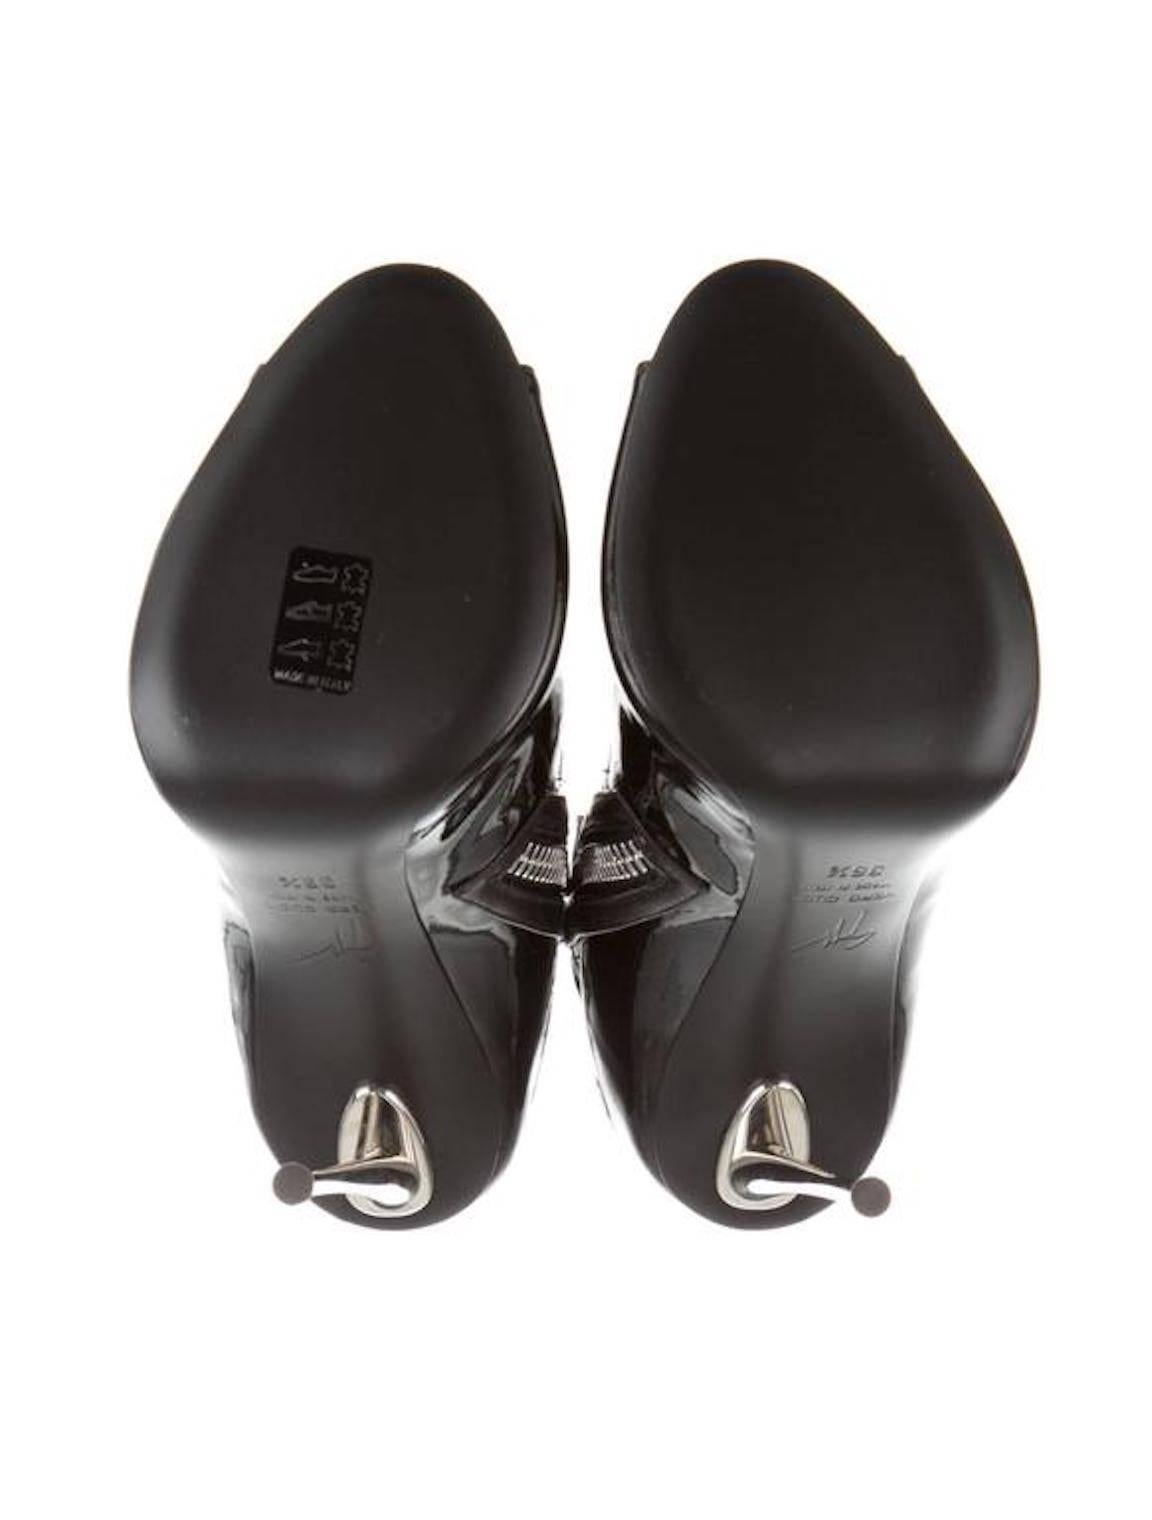 Giuseppe Zanotti New Black Patent Metal Heels Ankle Booties  1